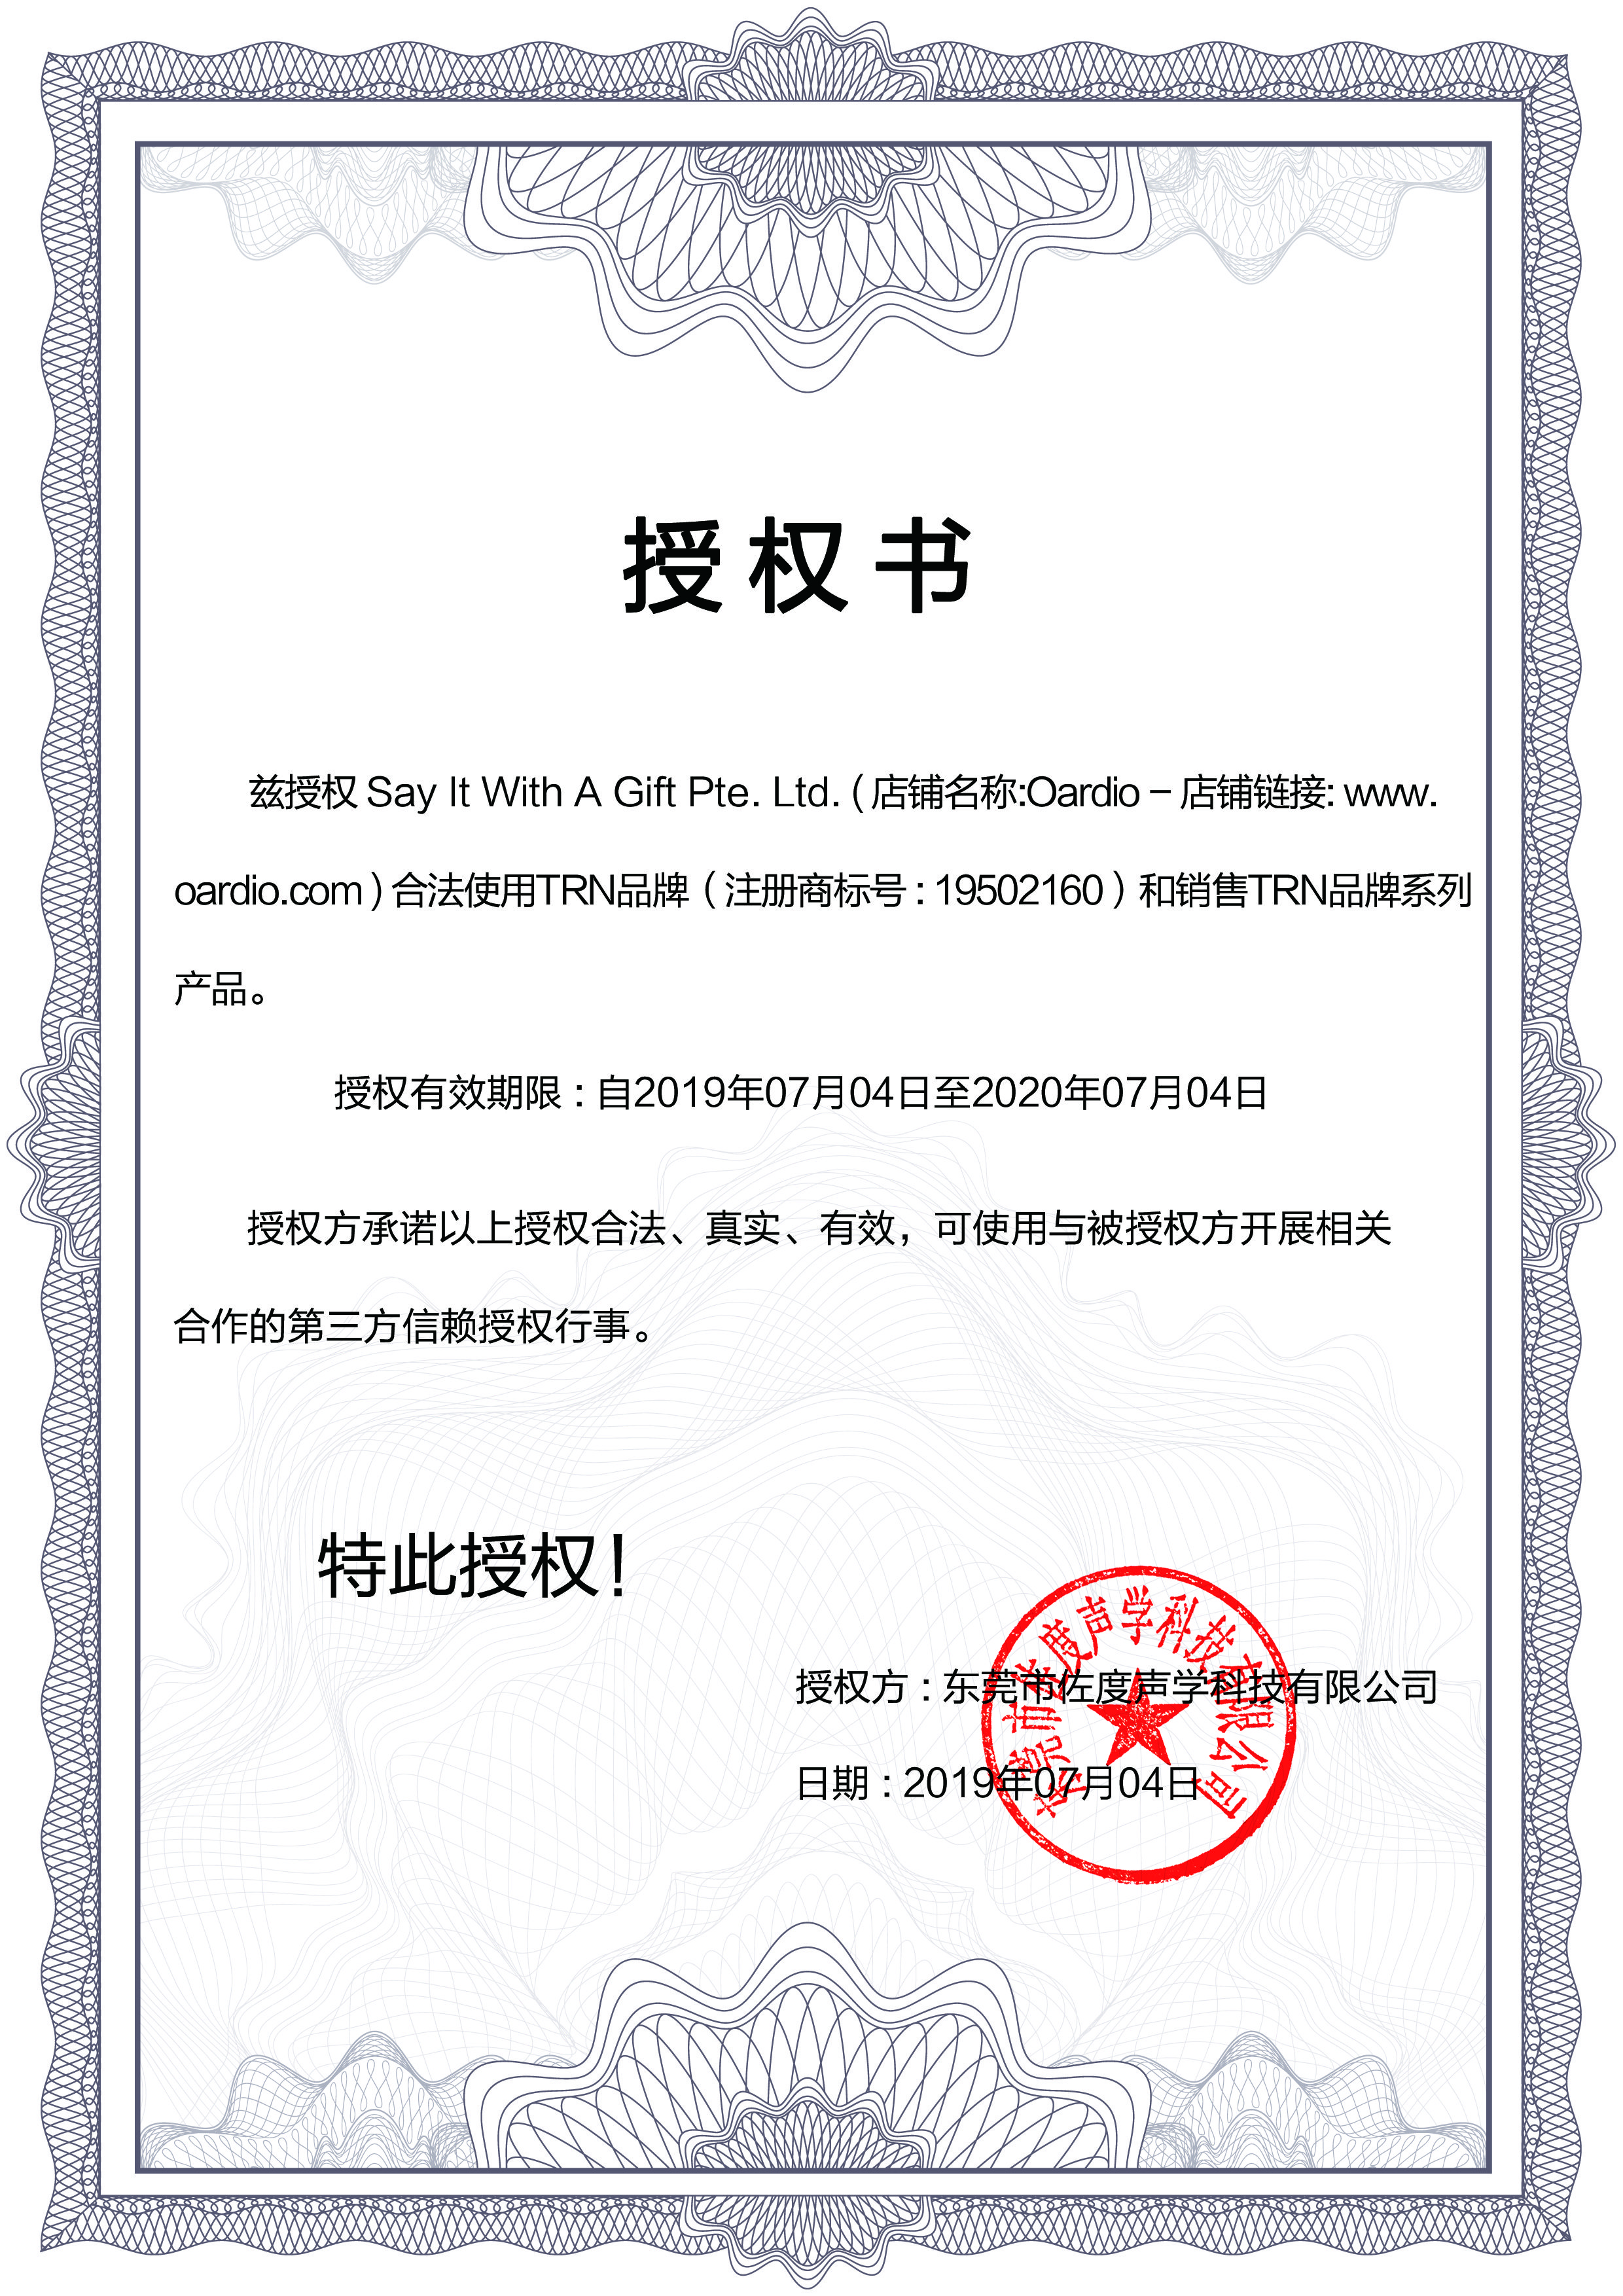 TRN Oardio Authorized Agent Certificate